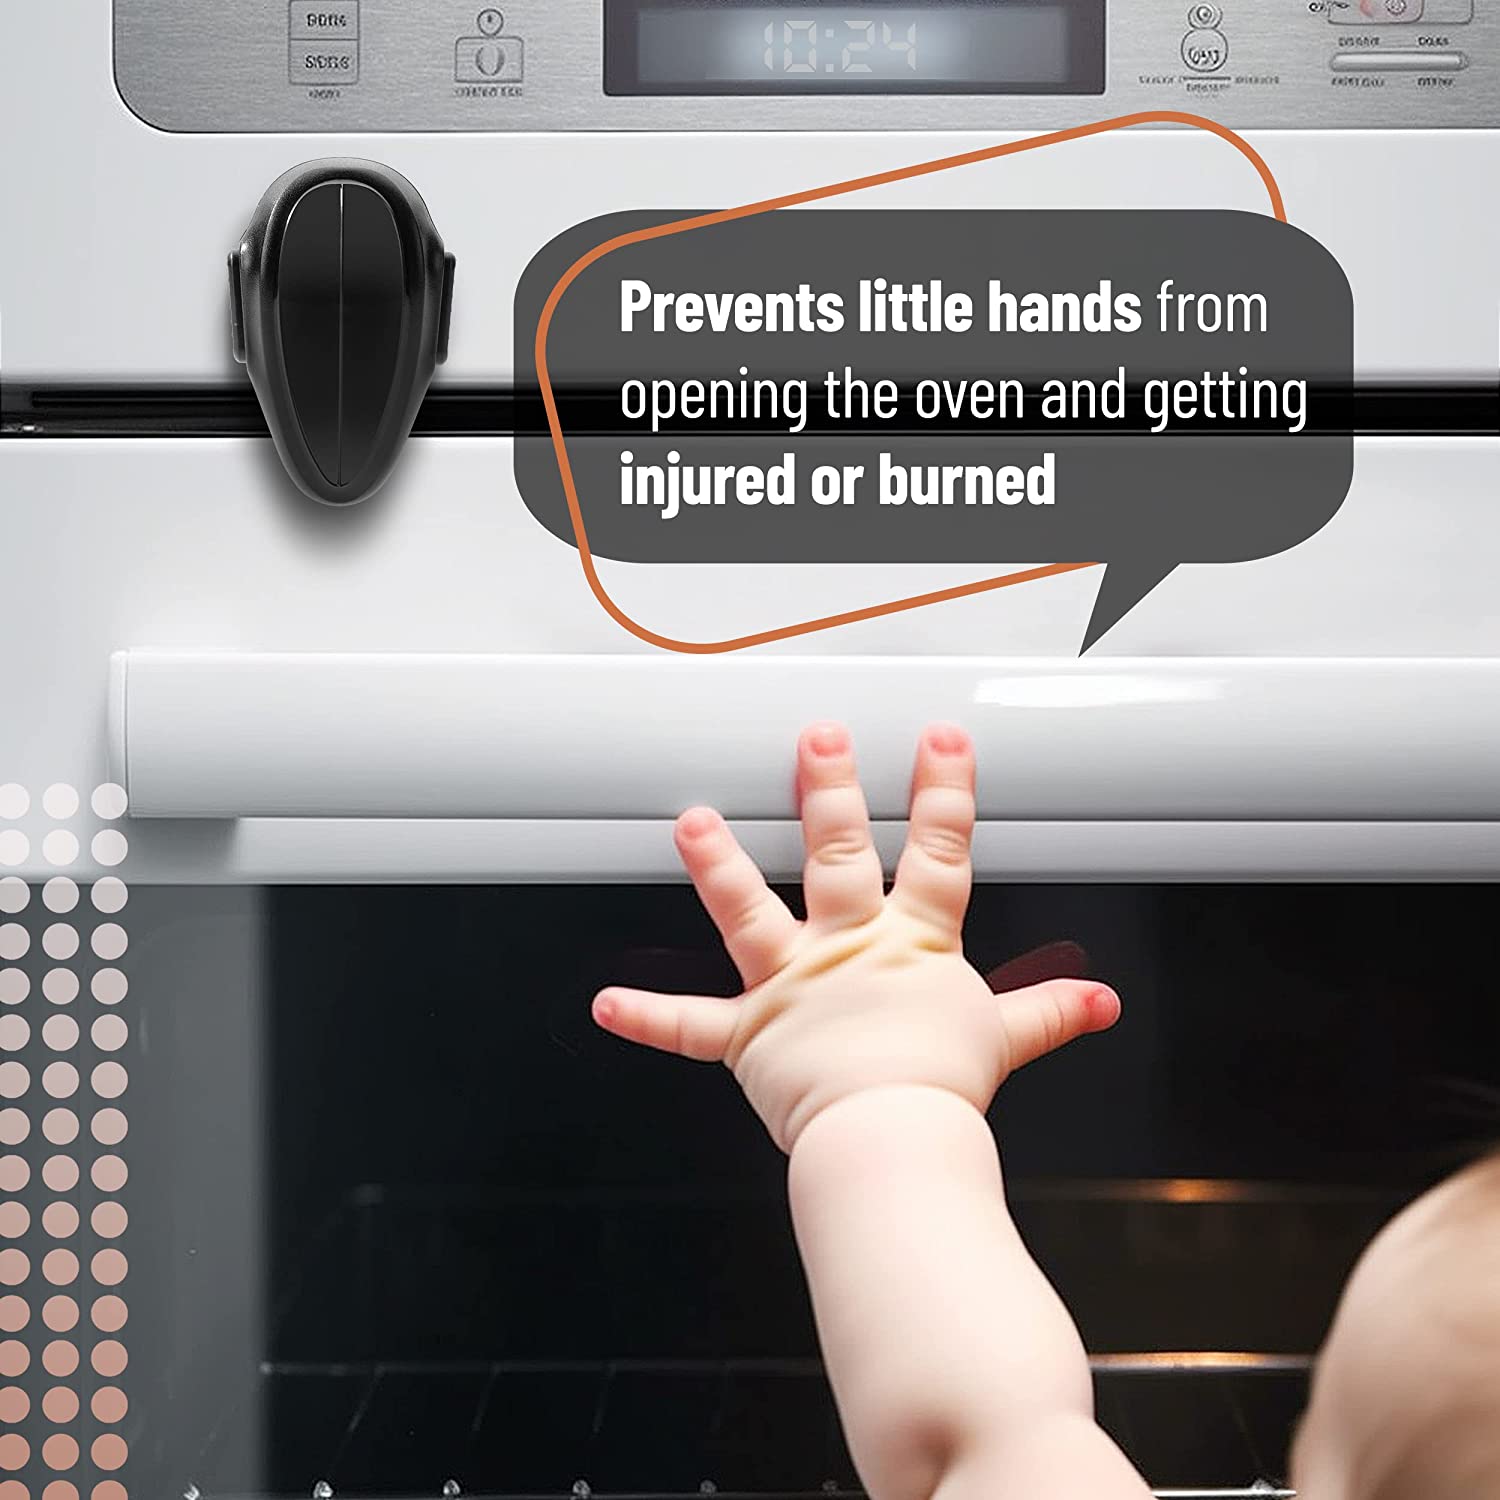 Mr. Pen- Oven Lock Child Safety, 1 Pack, Black, Heat-Resistant